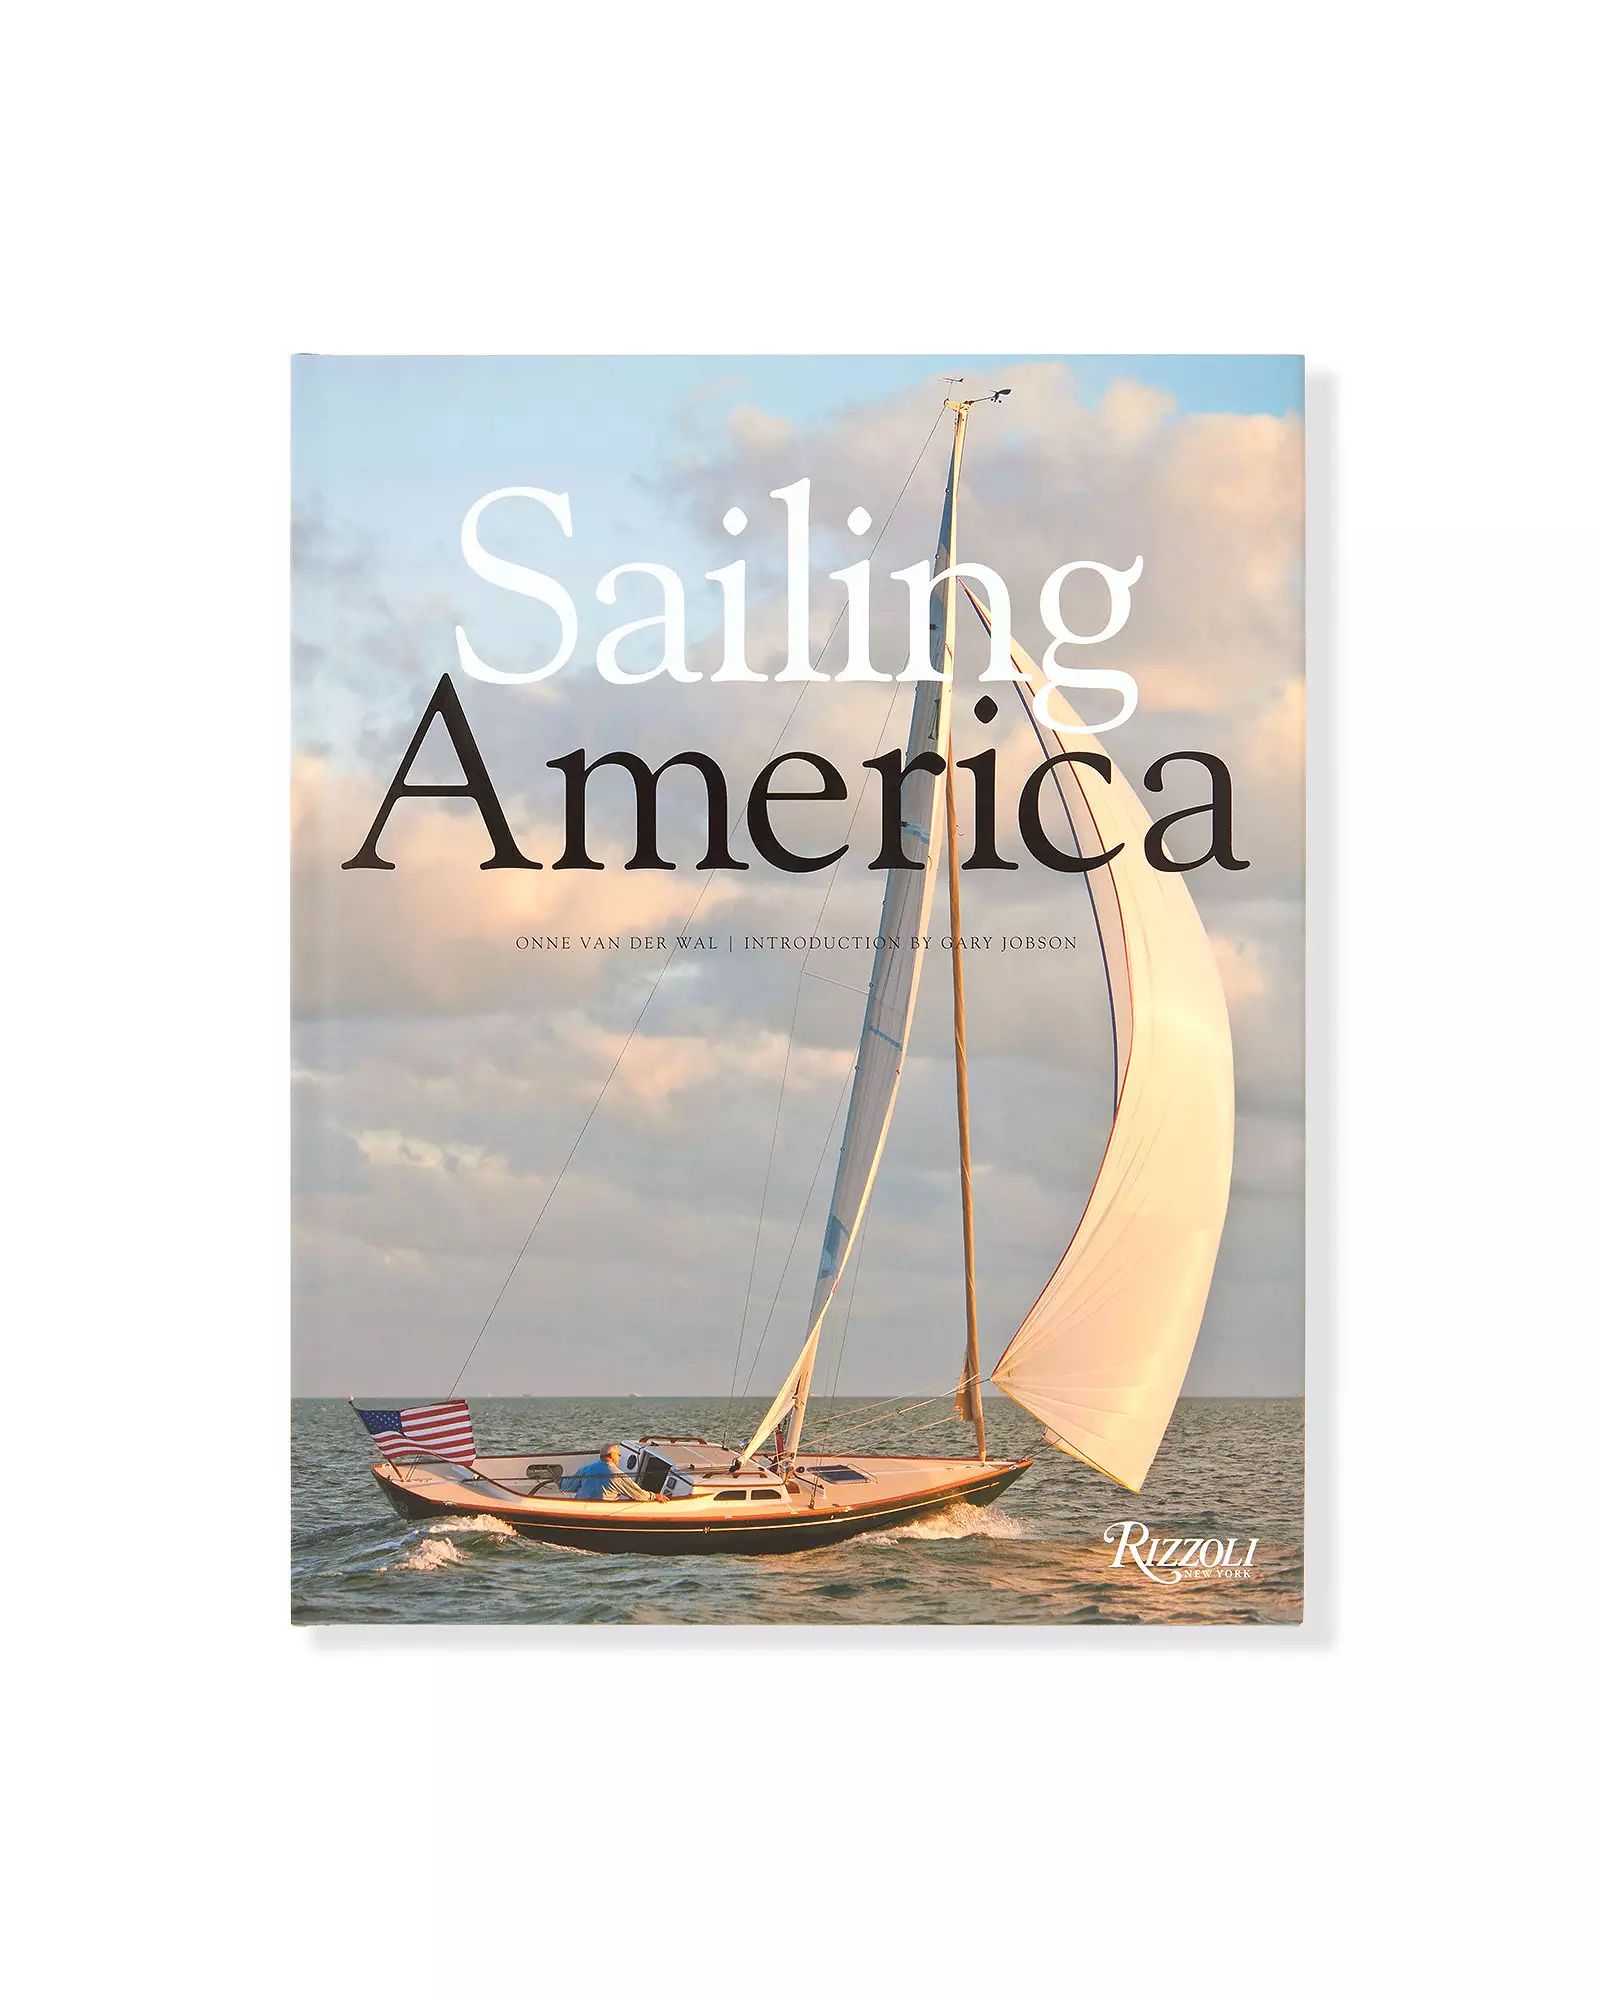 "Sailing America" by Onne van der Wal | Serena and Lily